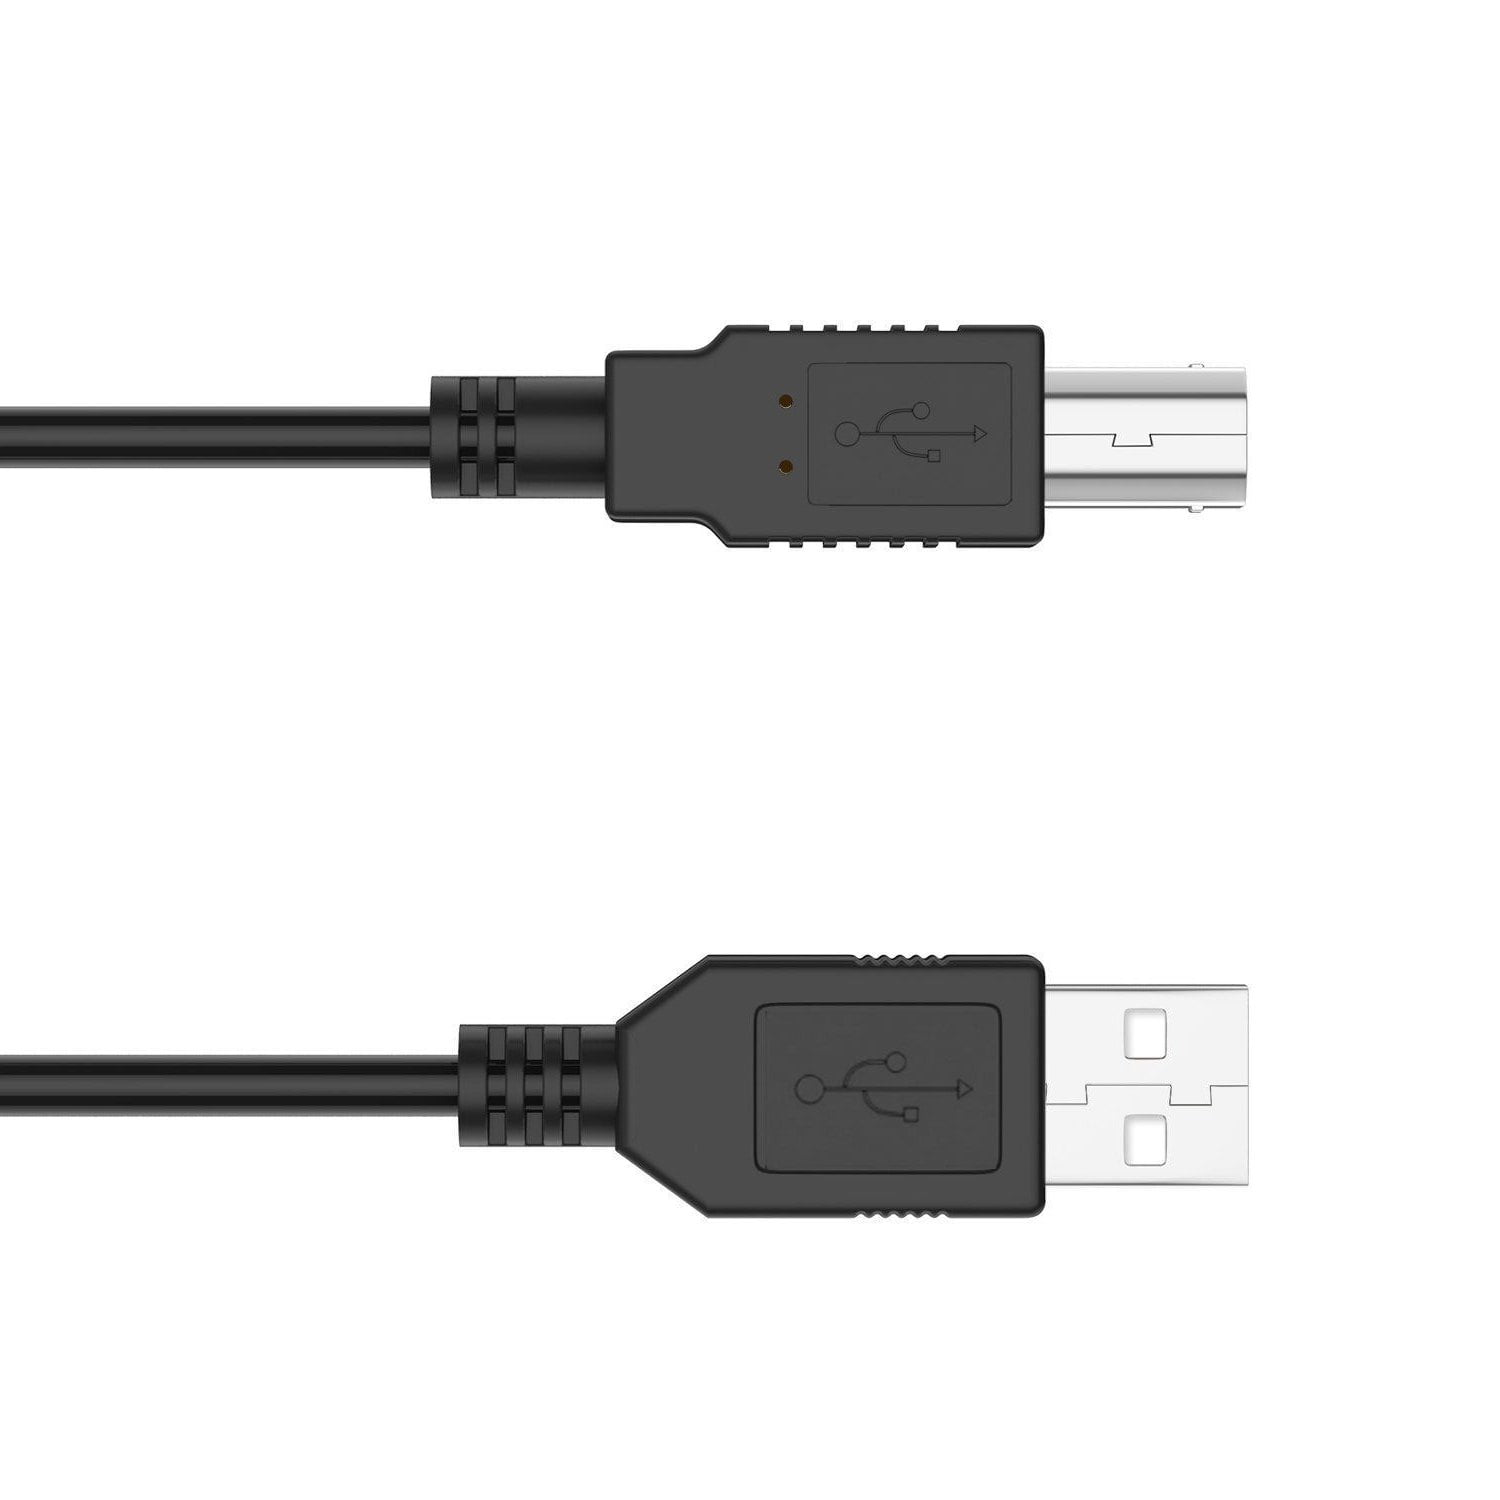 Vani USB Data Cable Cord for Mumark NS6 NS7 III MIXDECK SERATO DJ Controller 